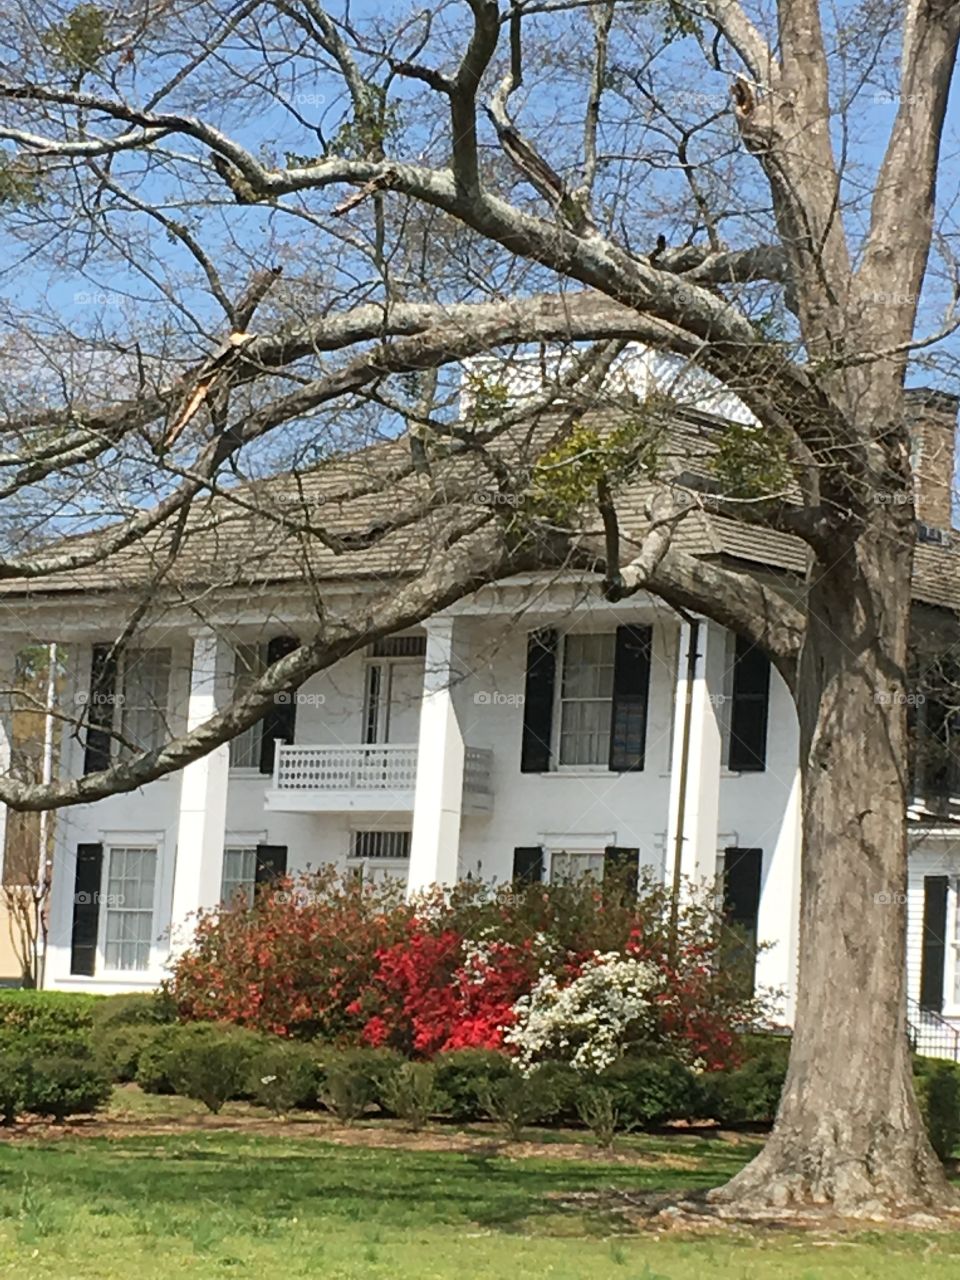 Civil War mansion 